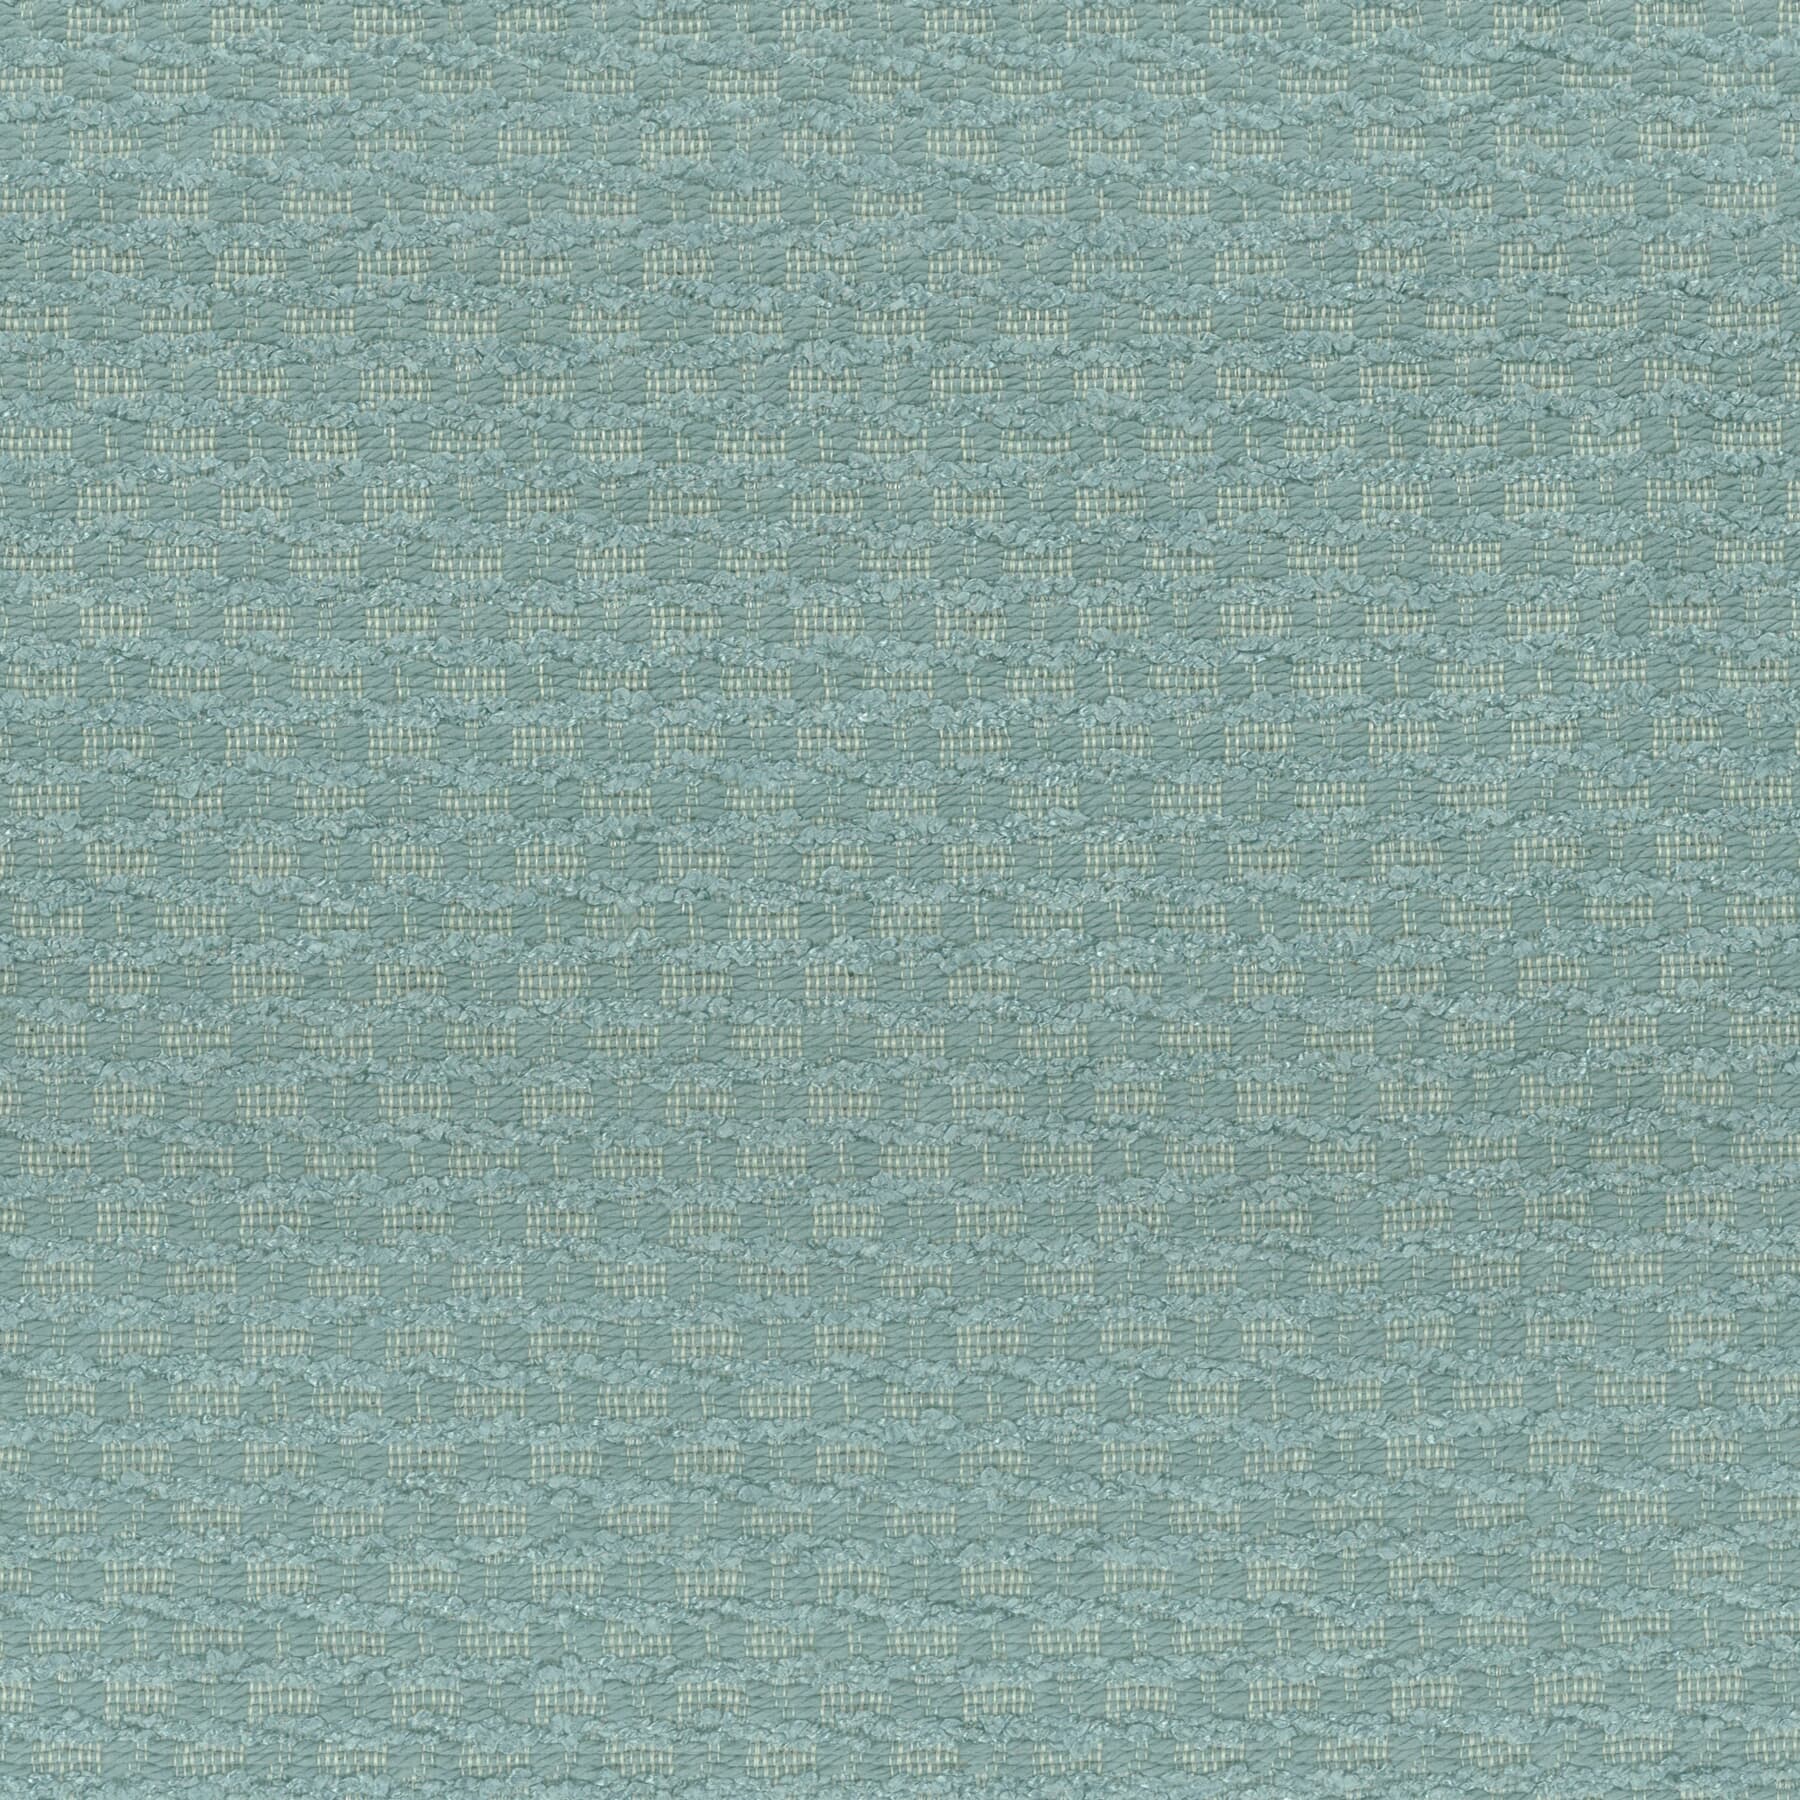 7716-4 Sisal Plain by Stout Fabric